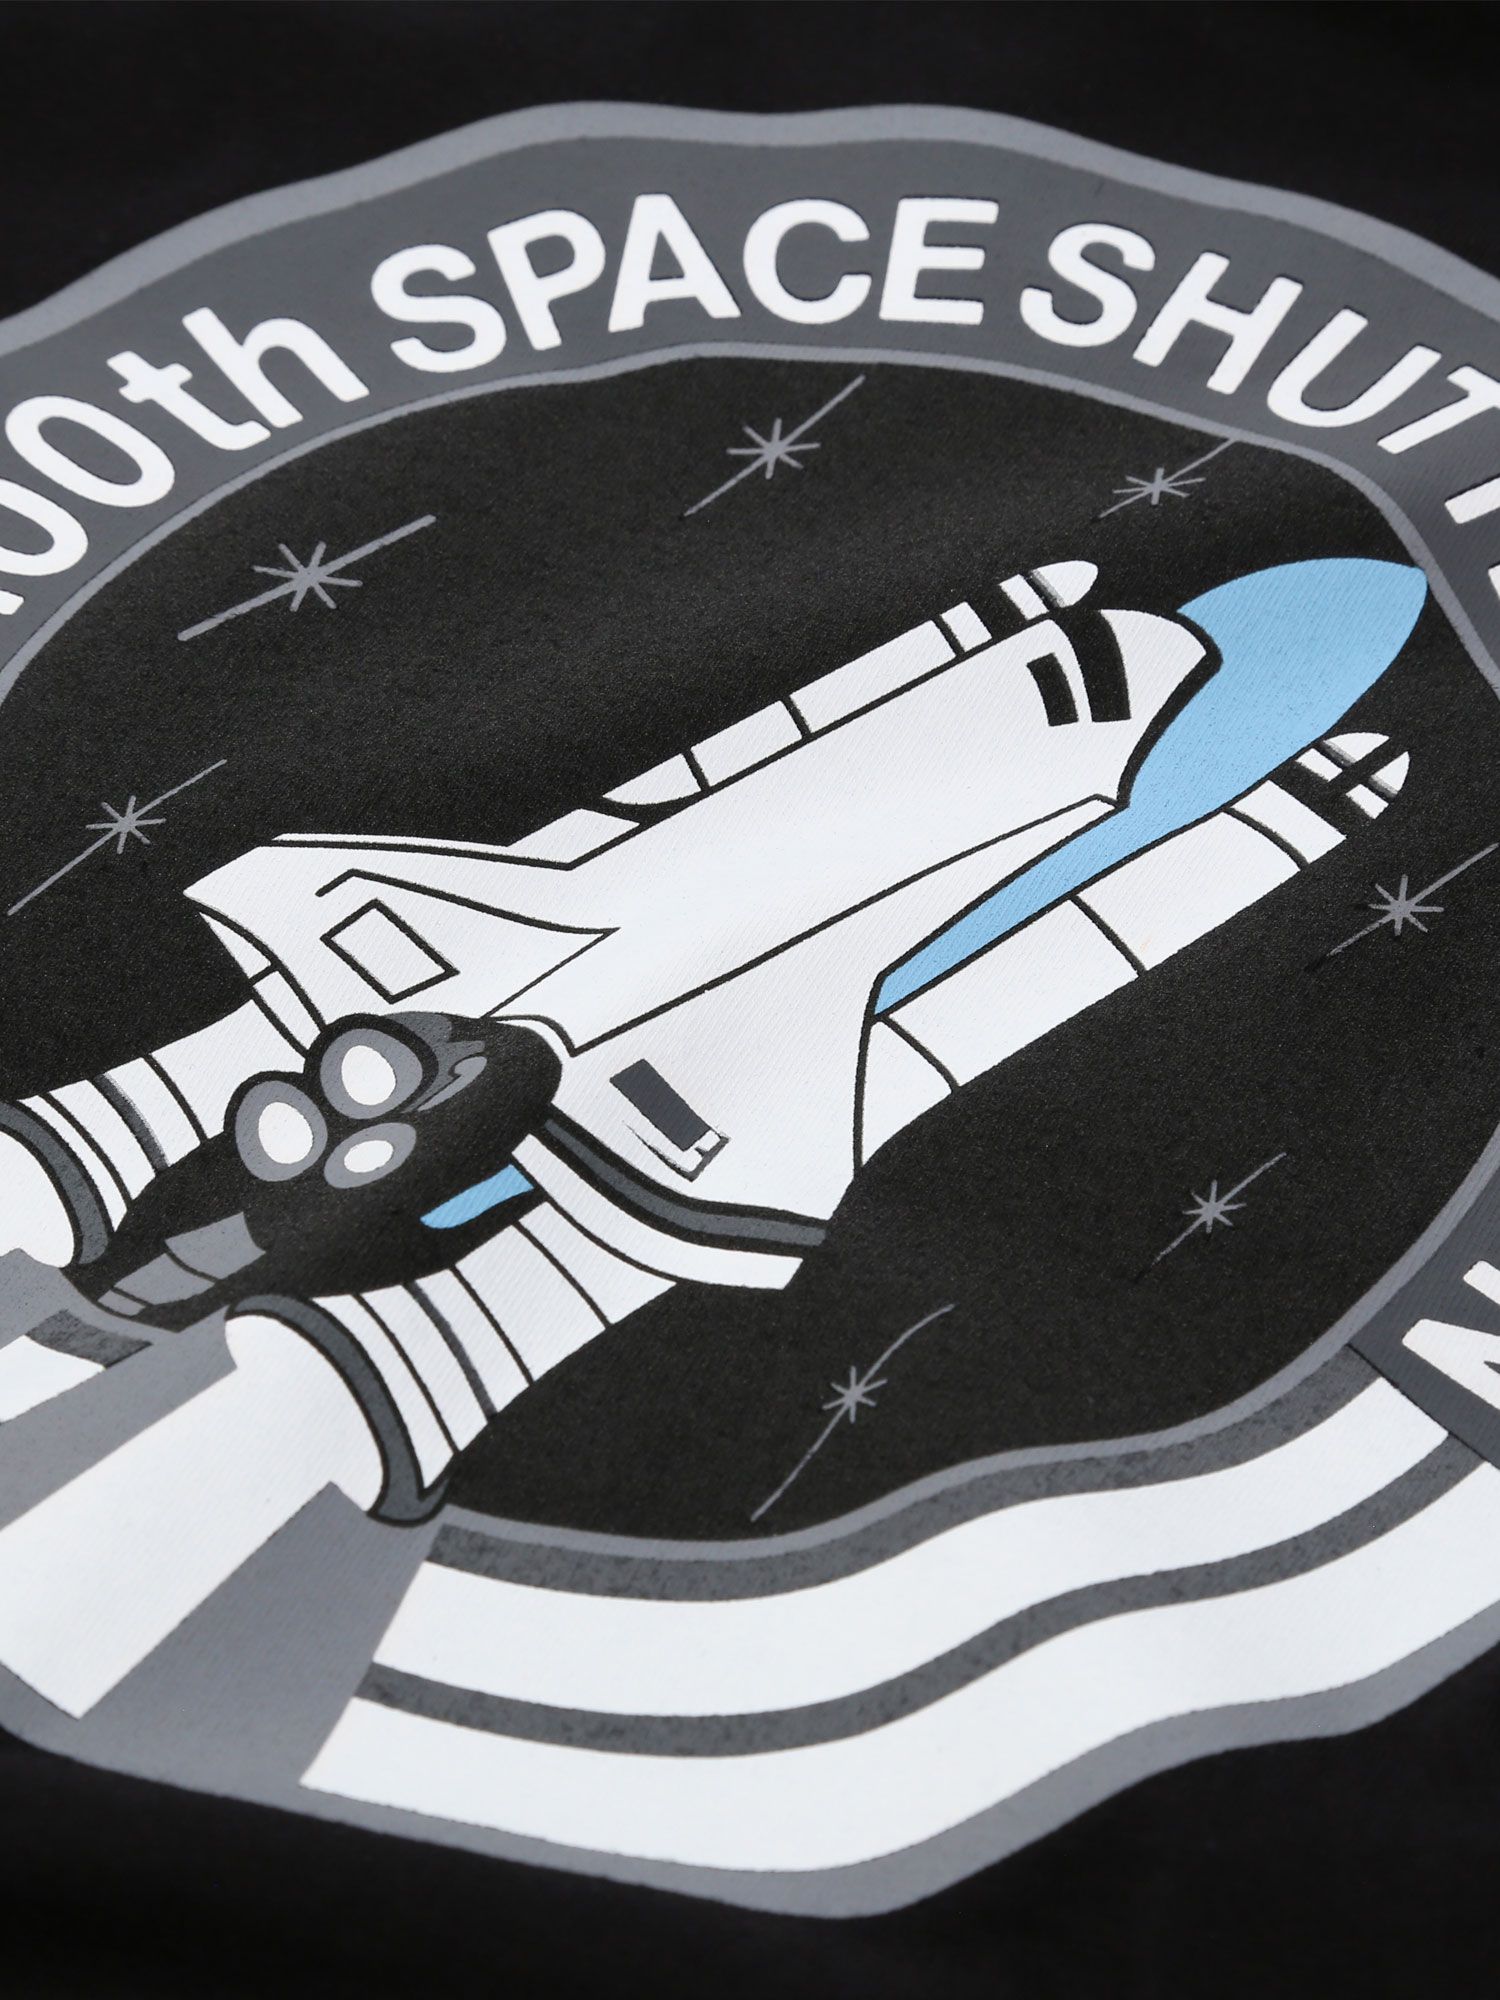 NASA Alpha Black Lewis John Jersey at X Cotton Space T-Shirt, & Industries Partners Shuttle